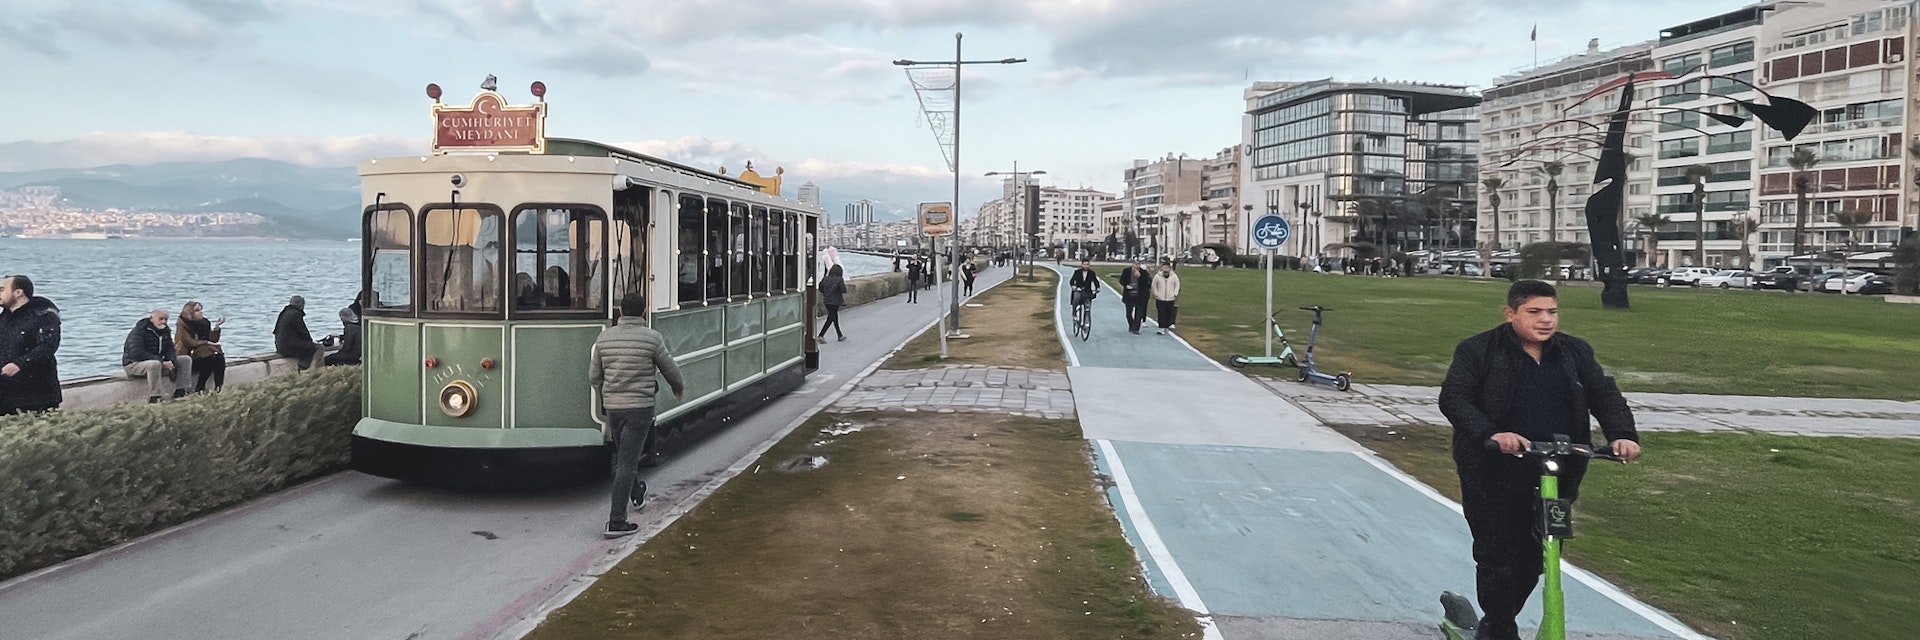 Izmir, Turkey - January 29, 2023 Kordon Street view in Pasaport District and historic tram
1464998170